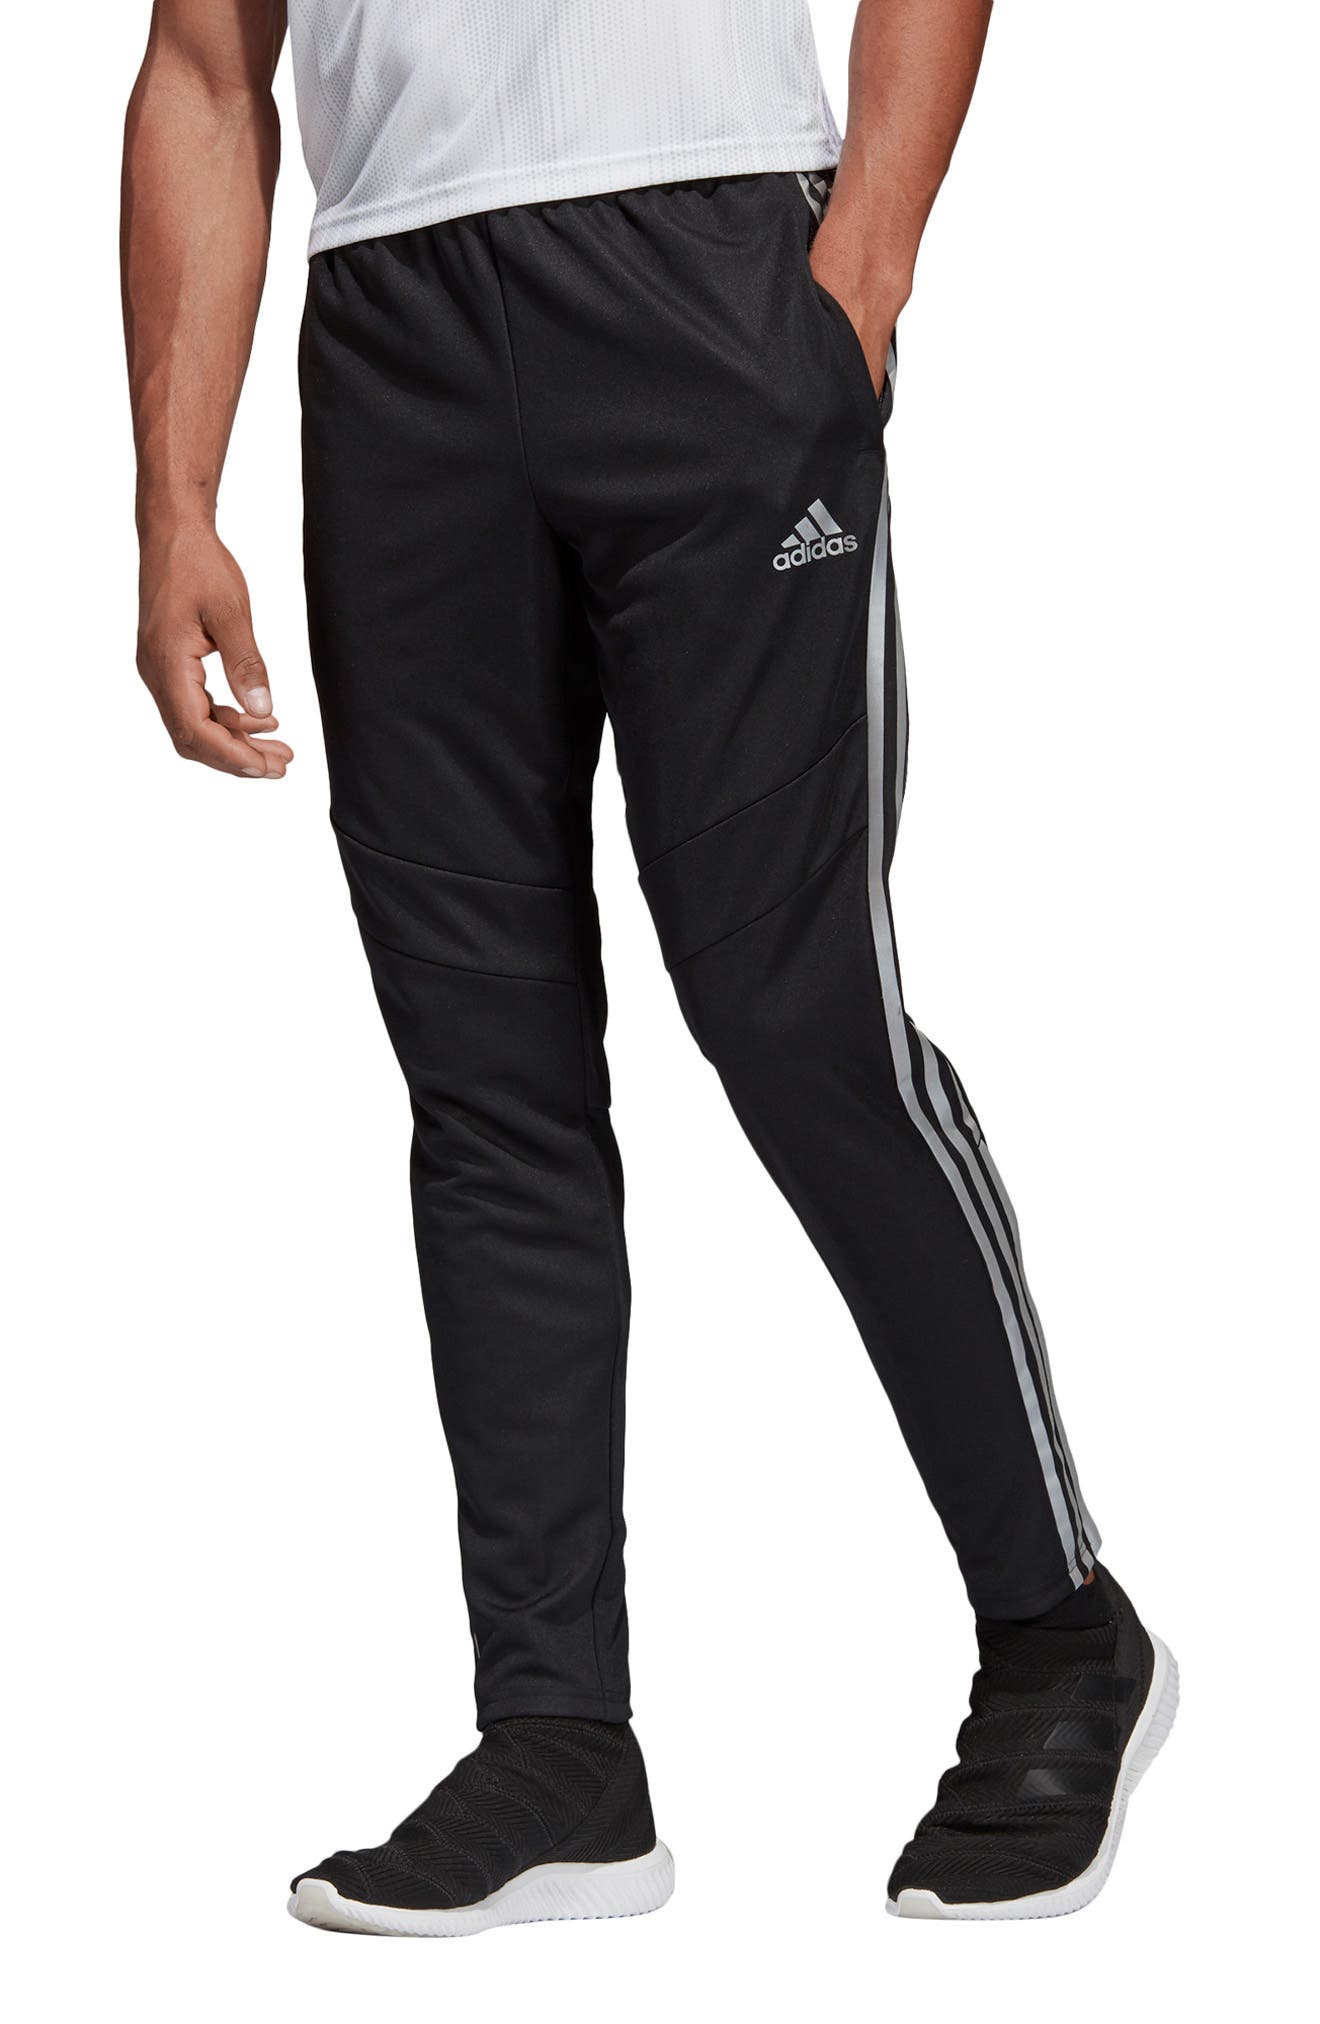 men's tall adidas track pants